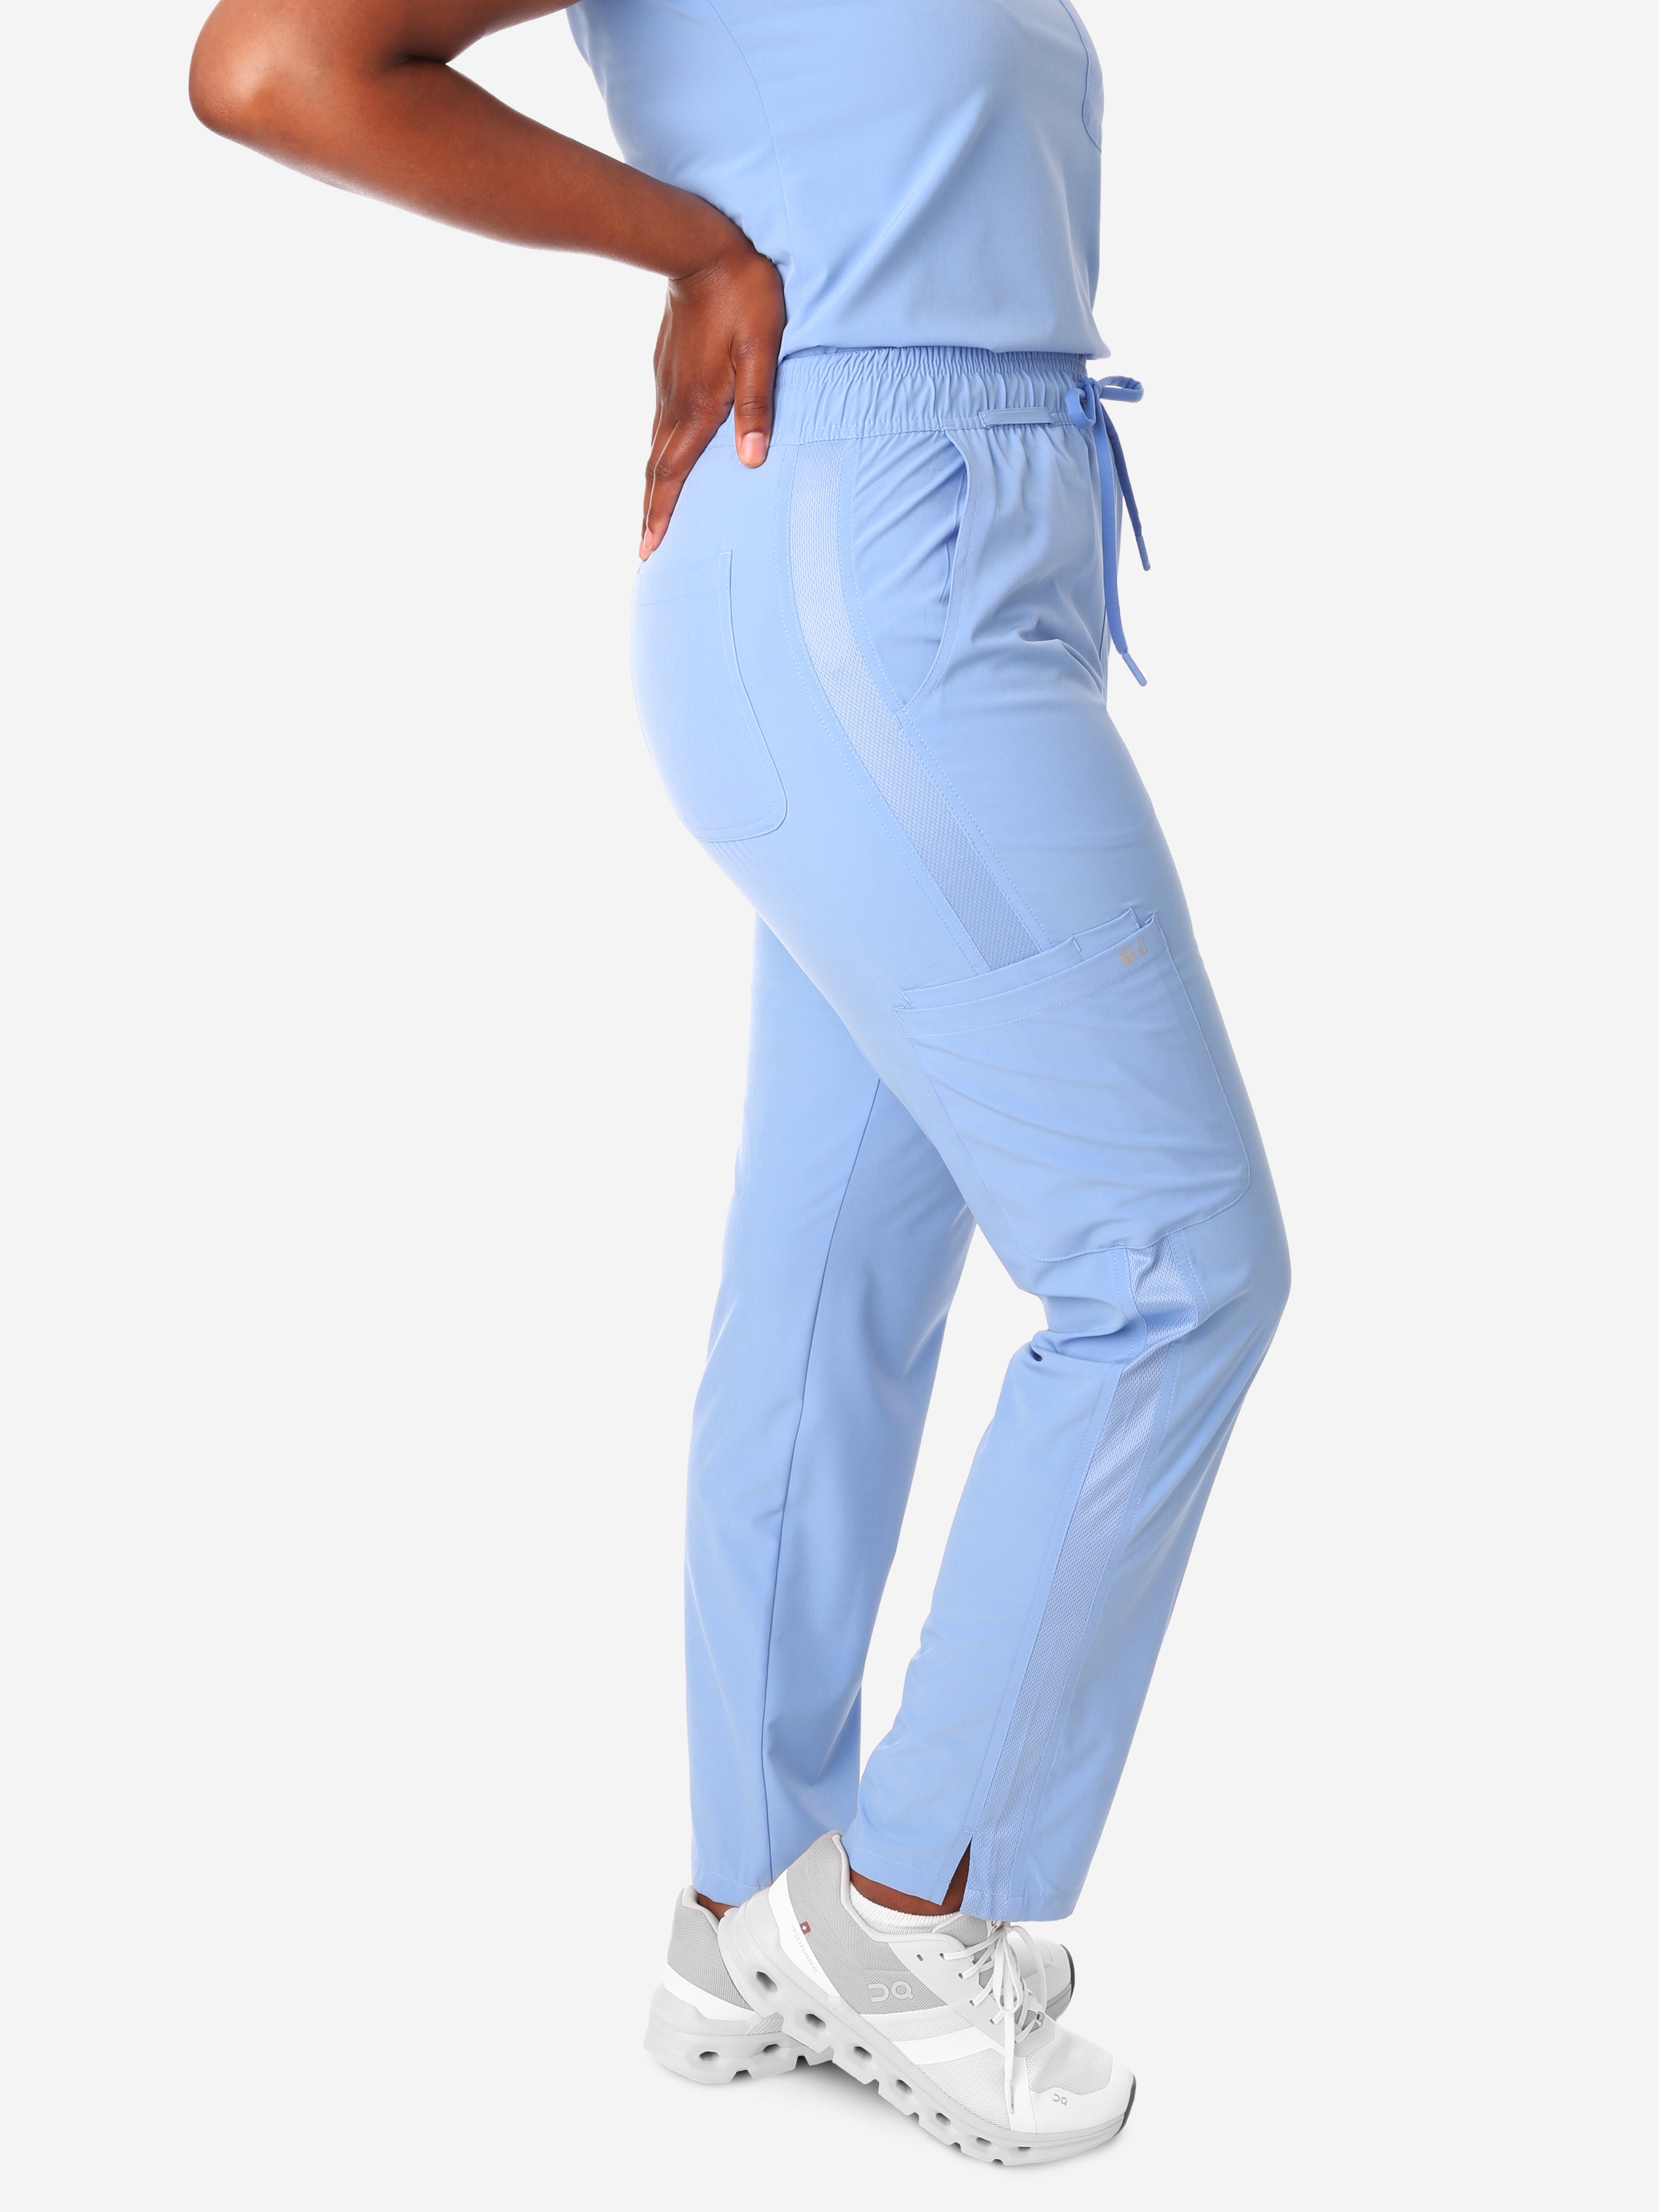 TiScrubs Ceil Blue Women's Stretch 9-Pocket Pants Side View Pants Only